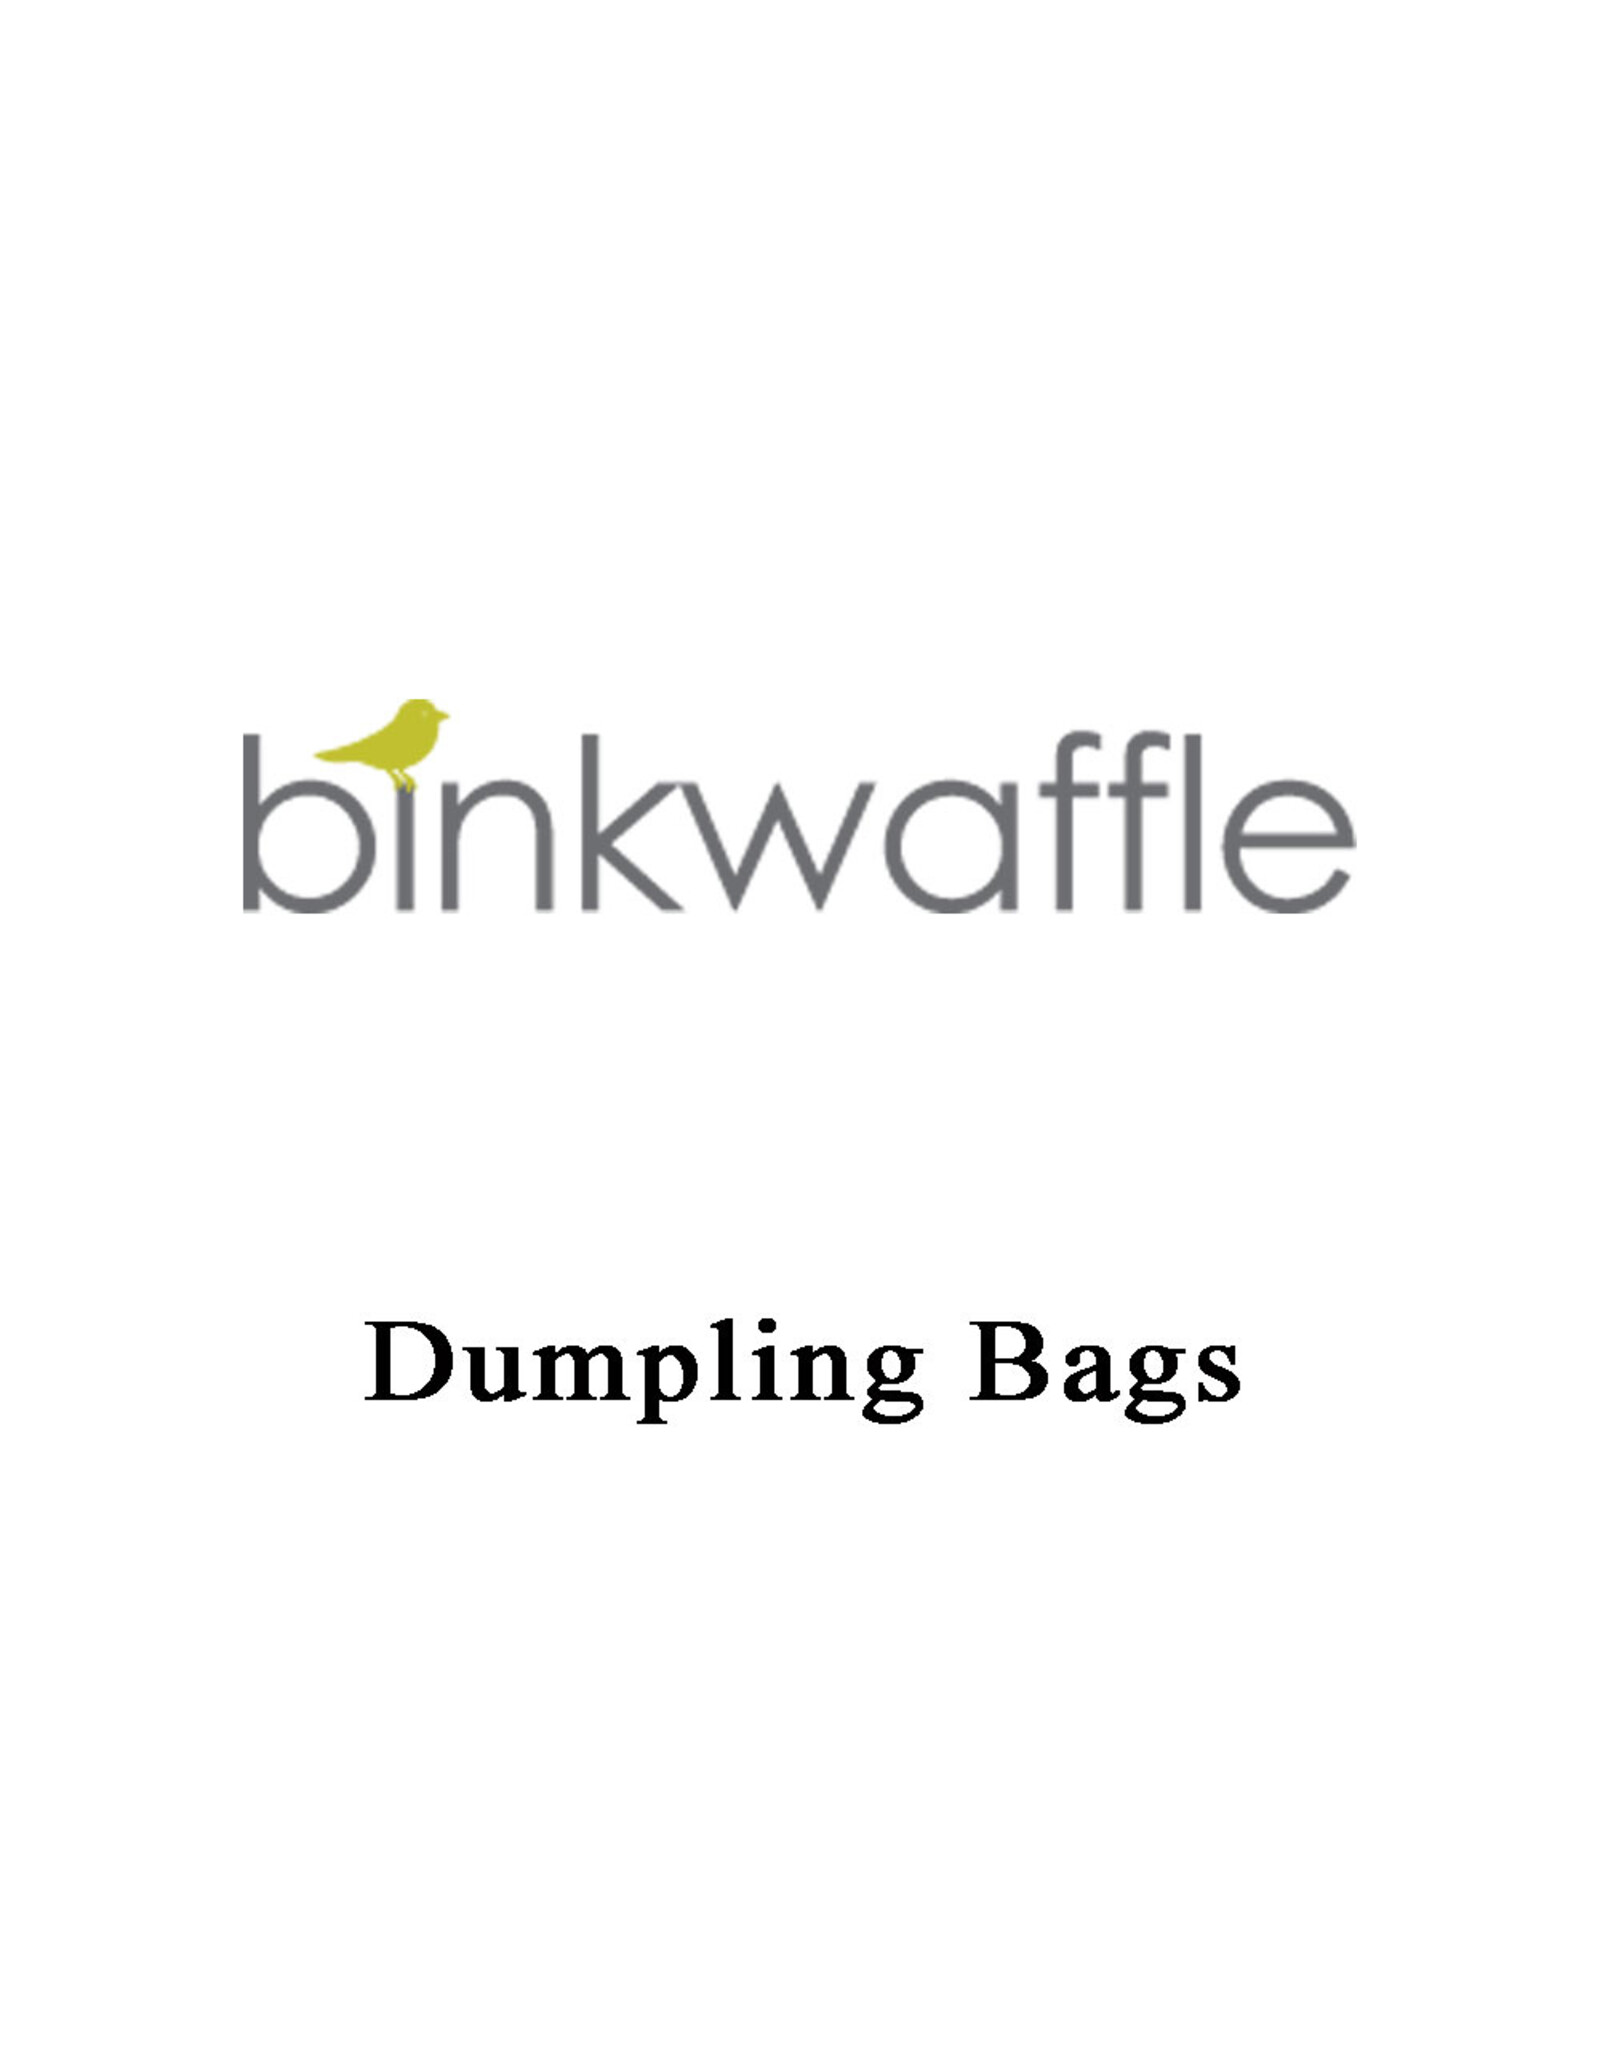 Binkwaffle Dumpling Bag